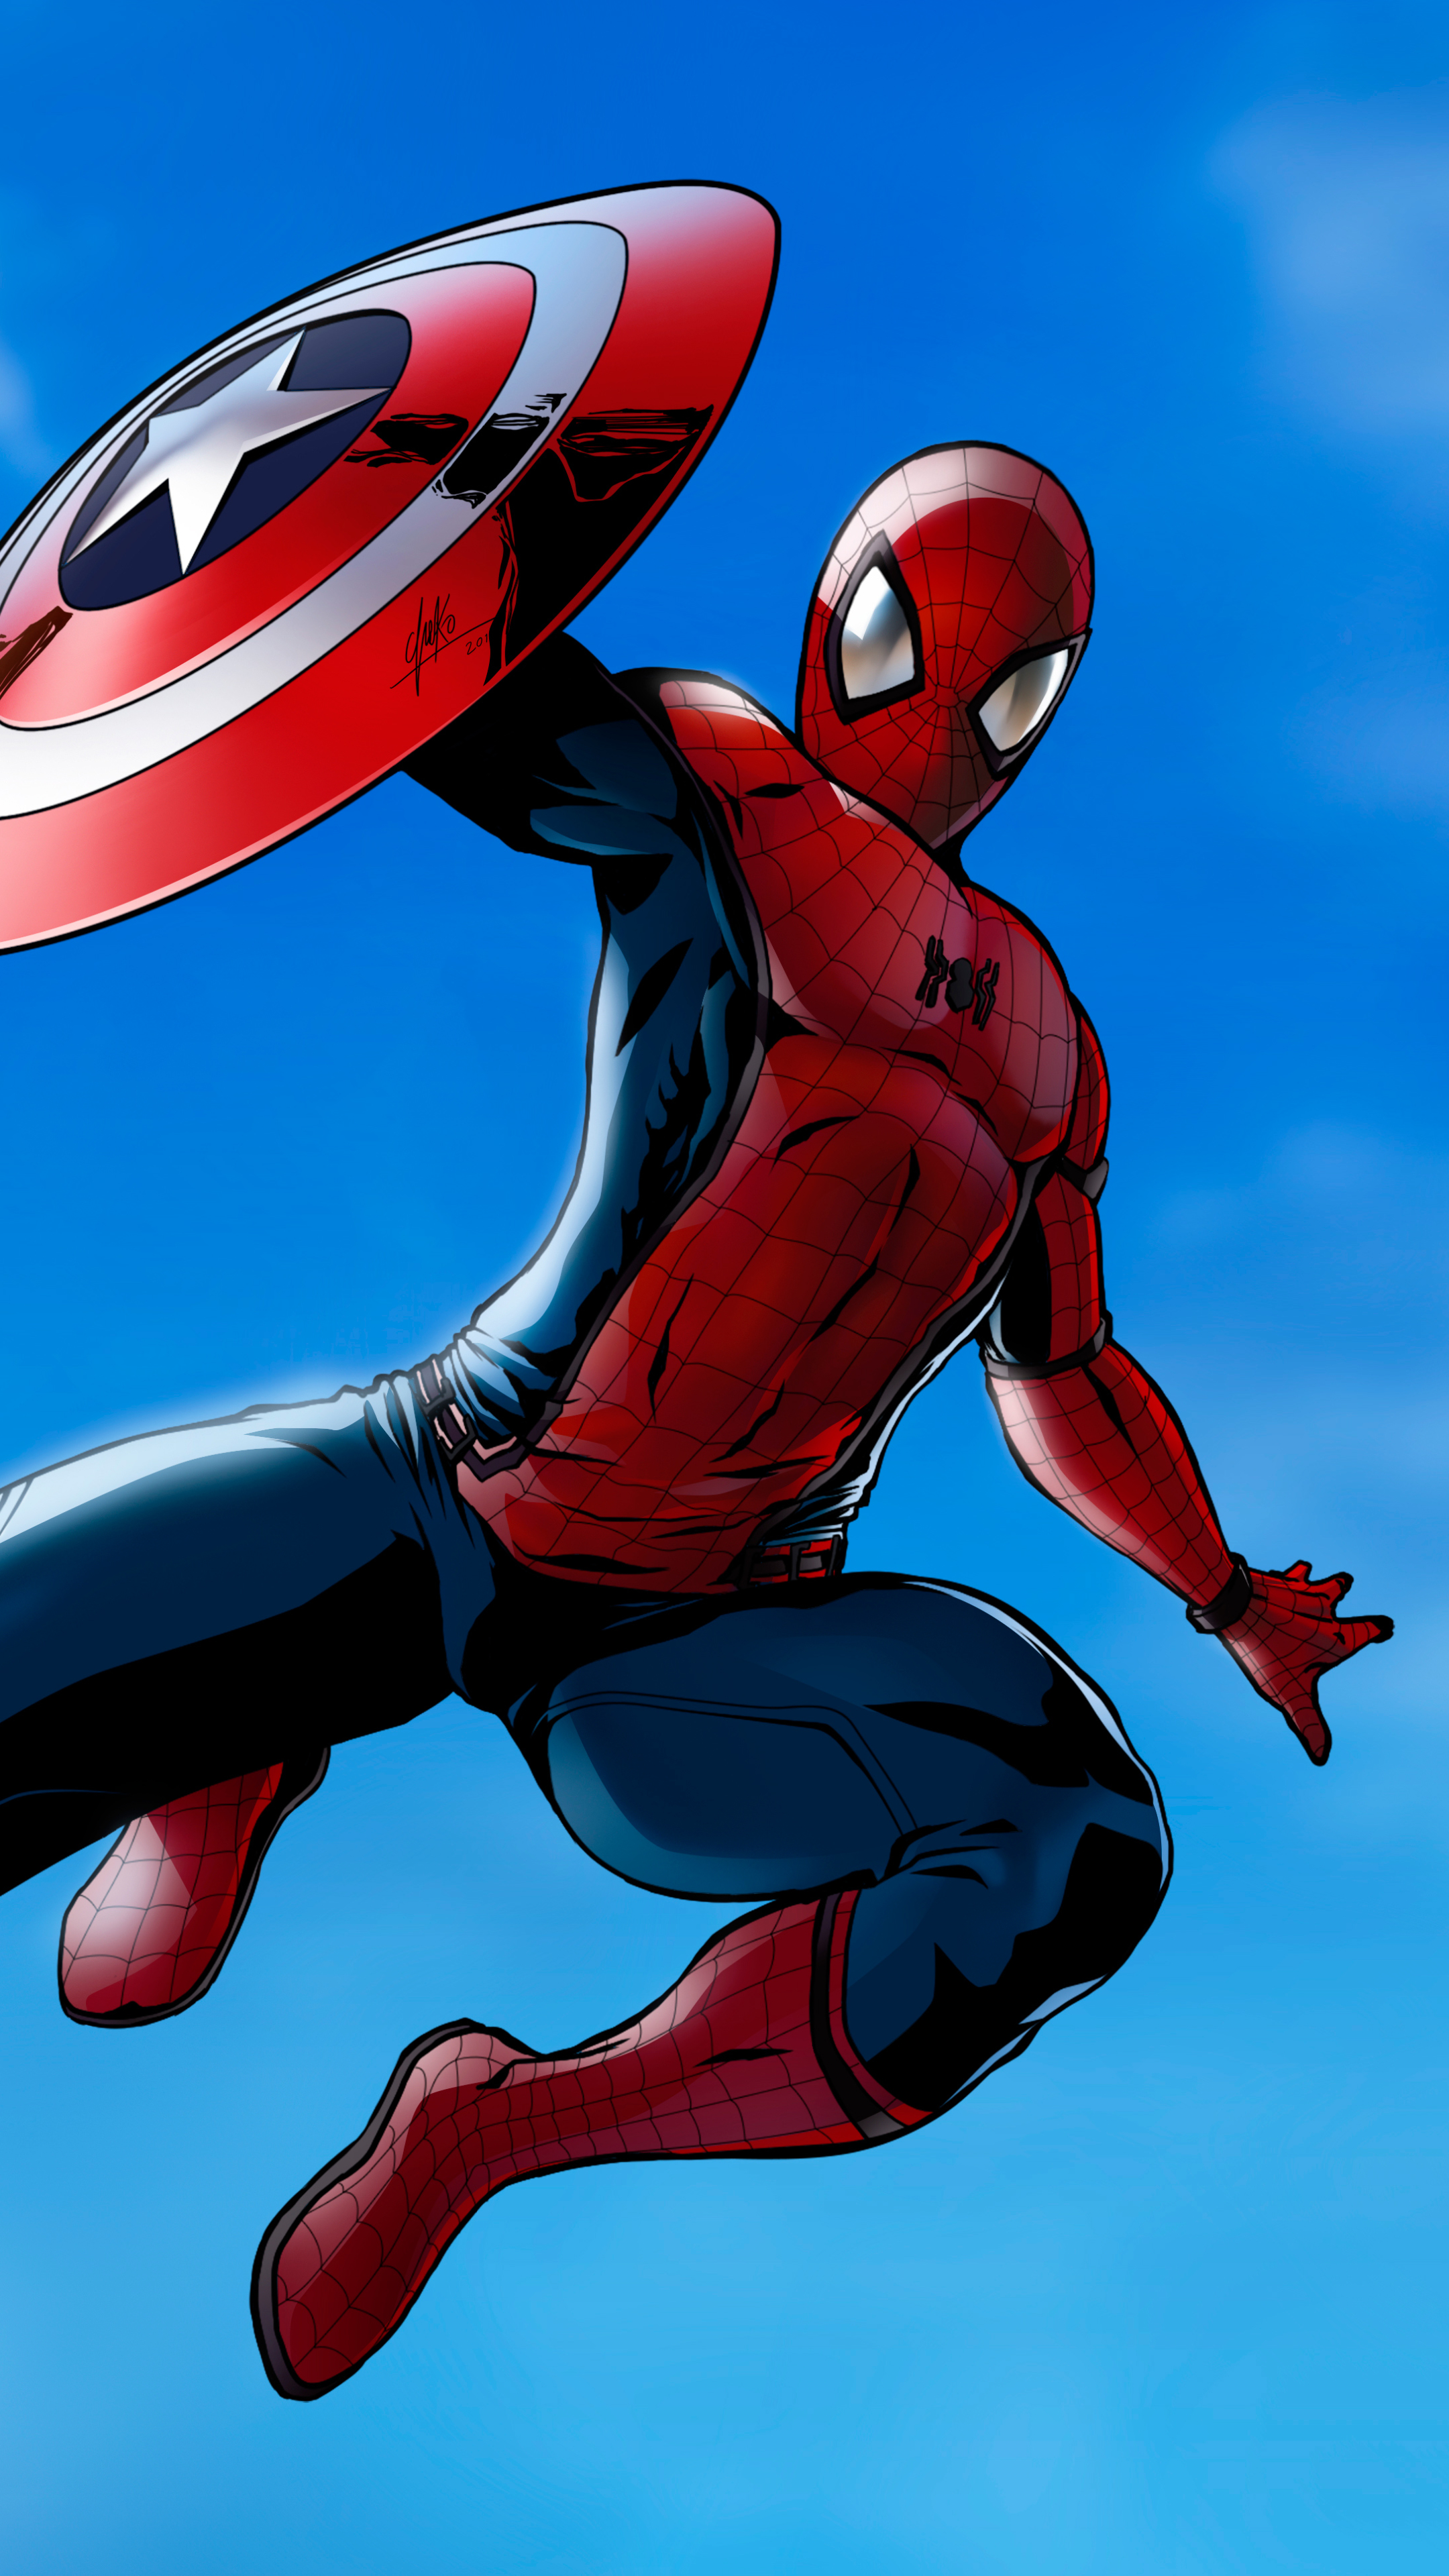 Descarga gratis la imagen Películas, Capitan América, Hombre Araña, Capitán América: Civil War en el escritorio de tu PC